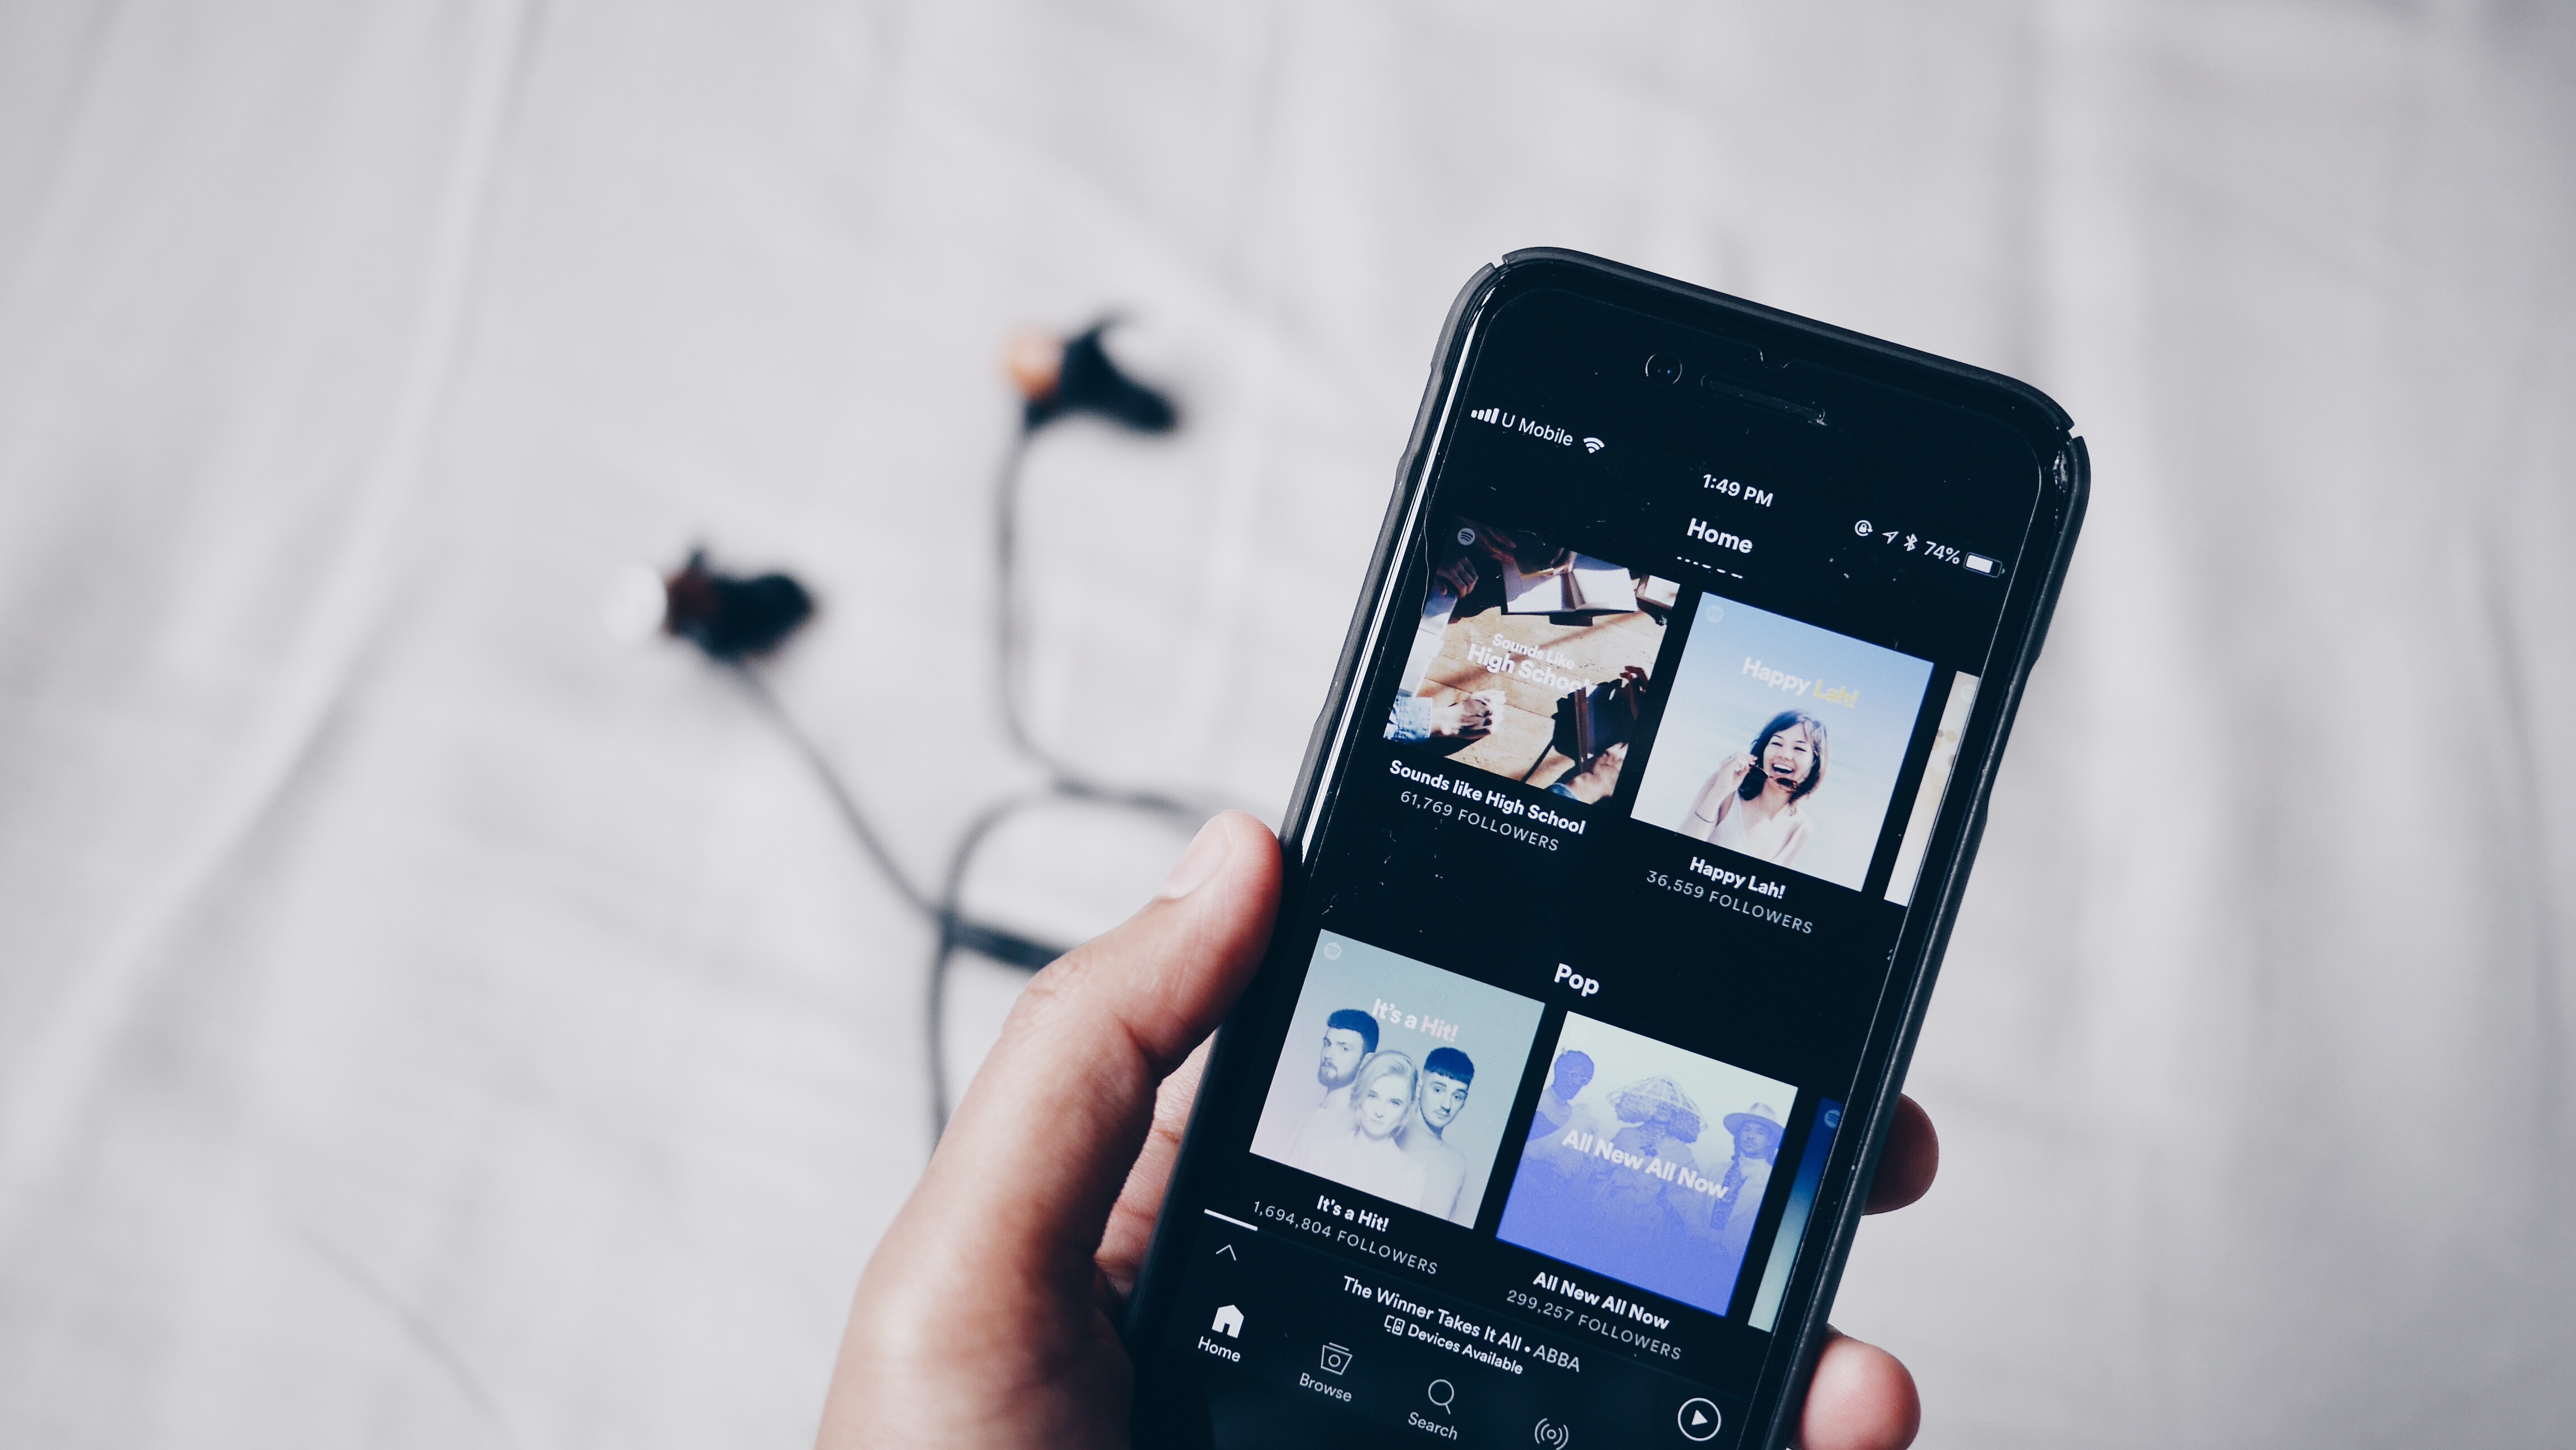 «HiFi»: Νέα επιλογή συνδρομής του Spotify με ήχο υψηλής ποιότητας